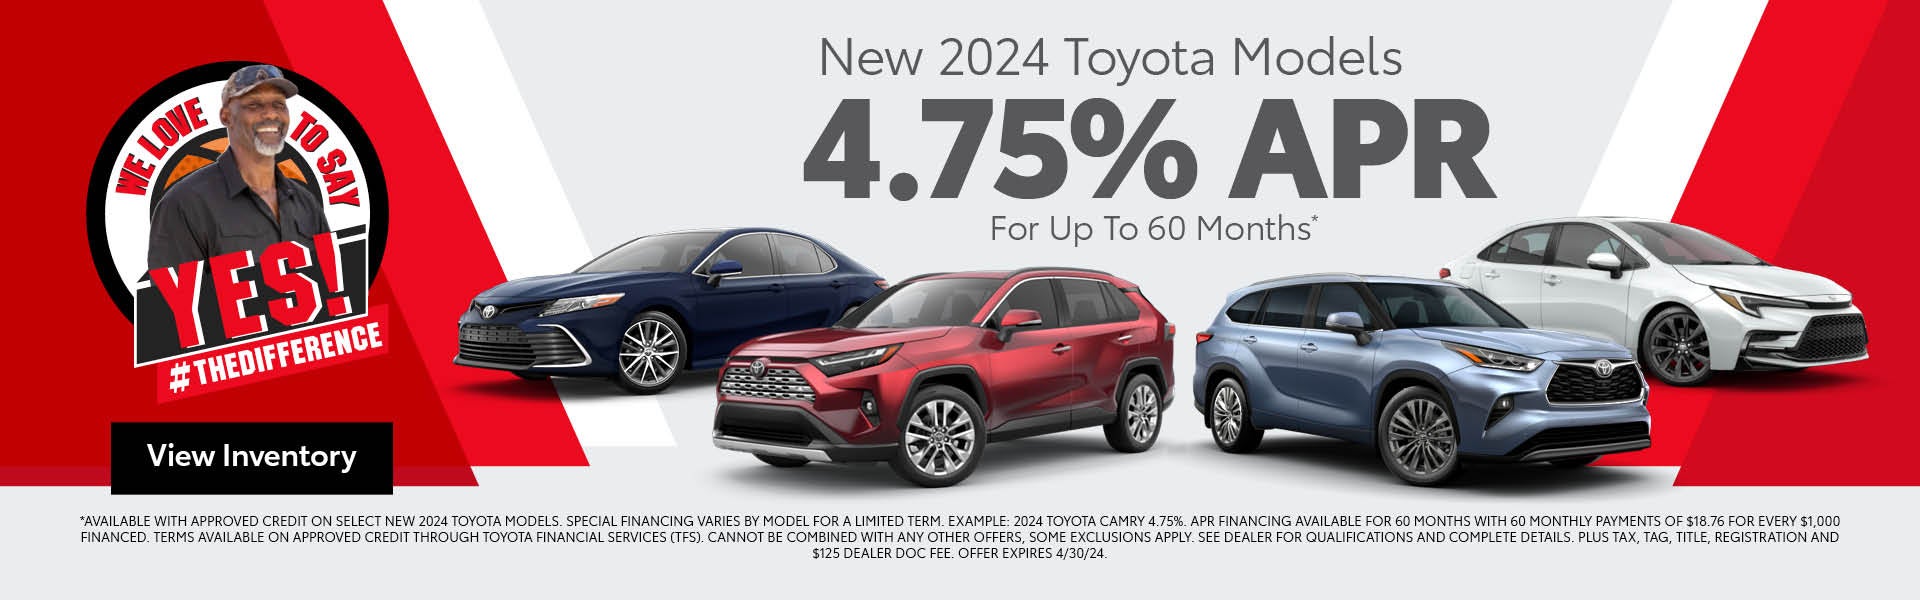 Special APR on New Toyota Models in El Dorado AR 